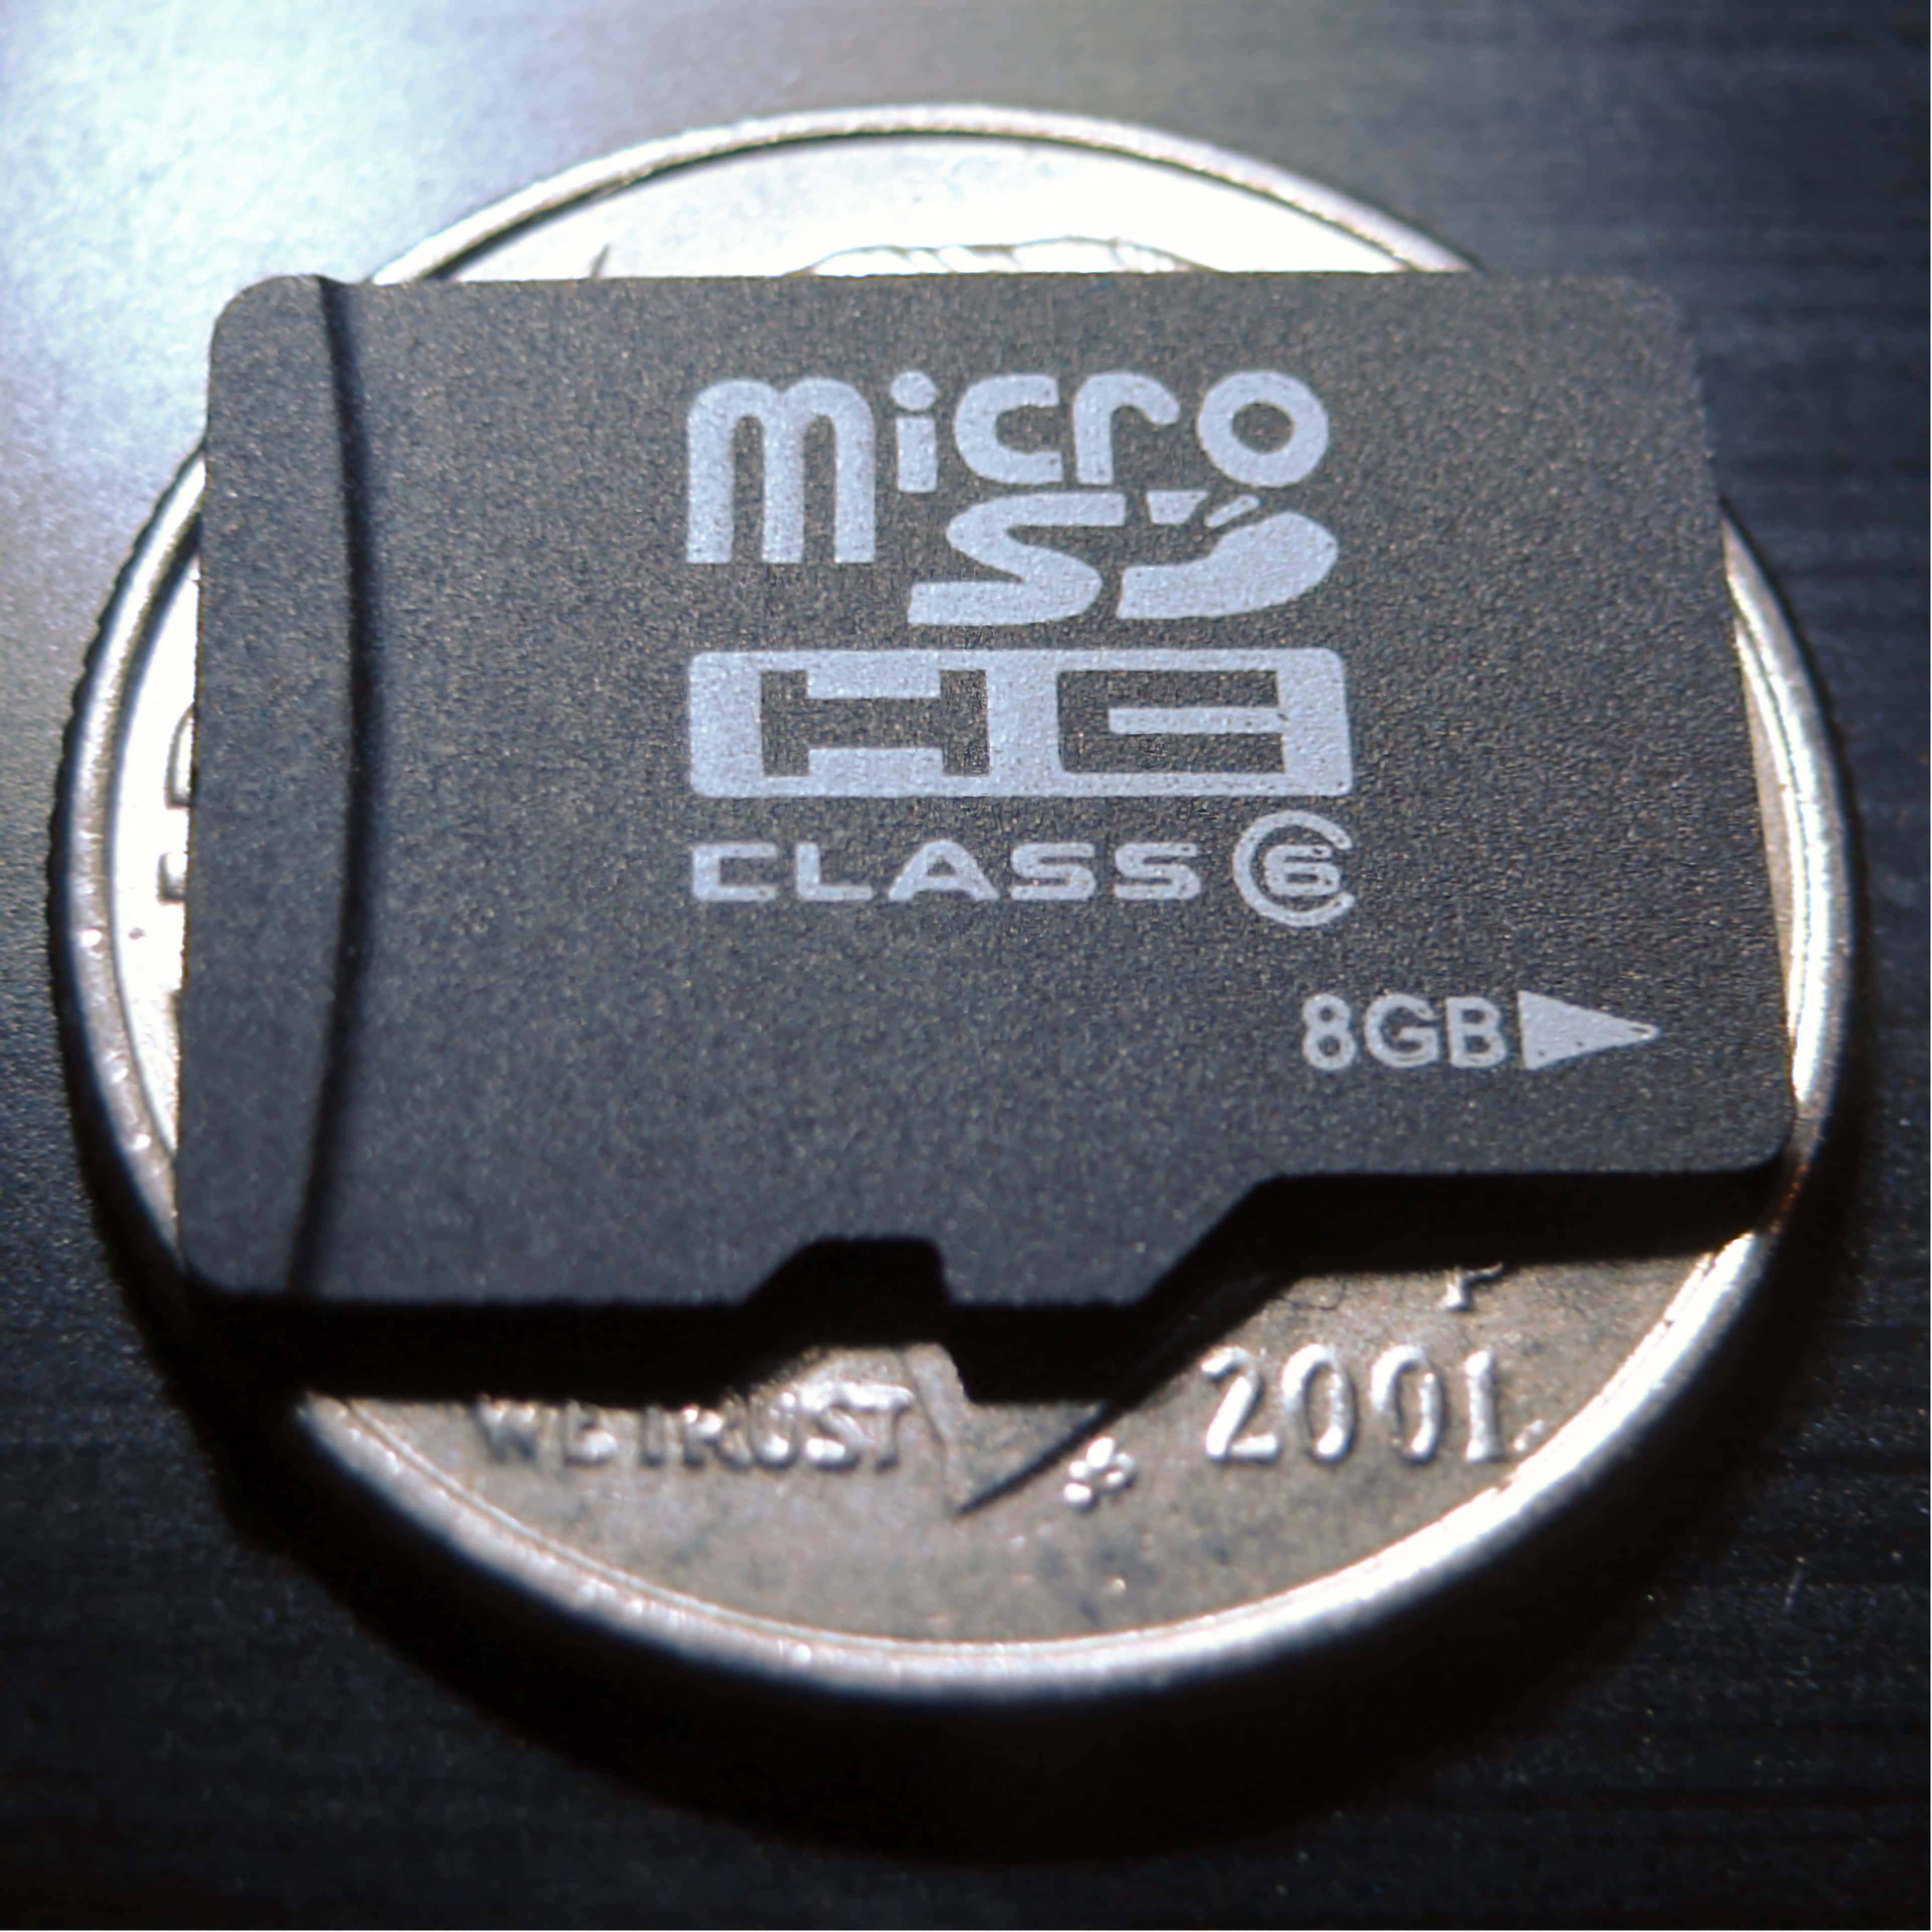 microSD card compared to a US quarter.